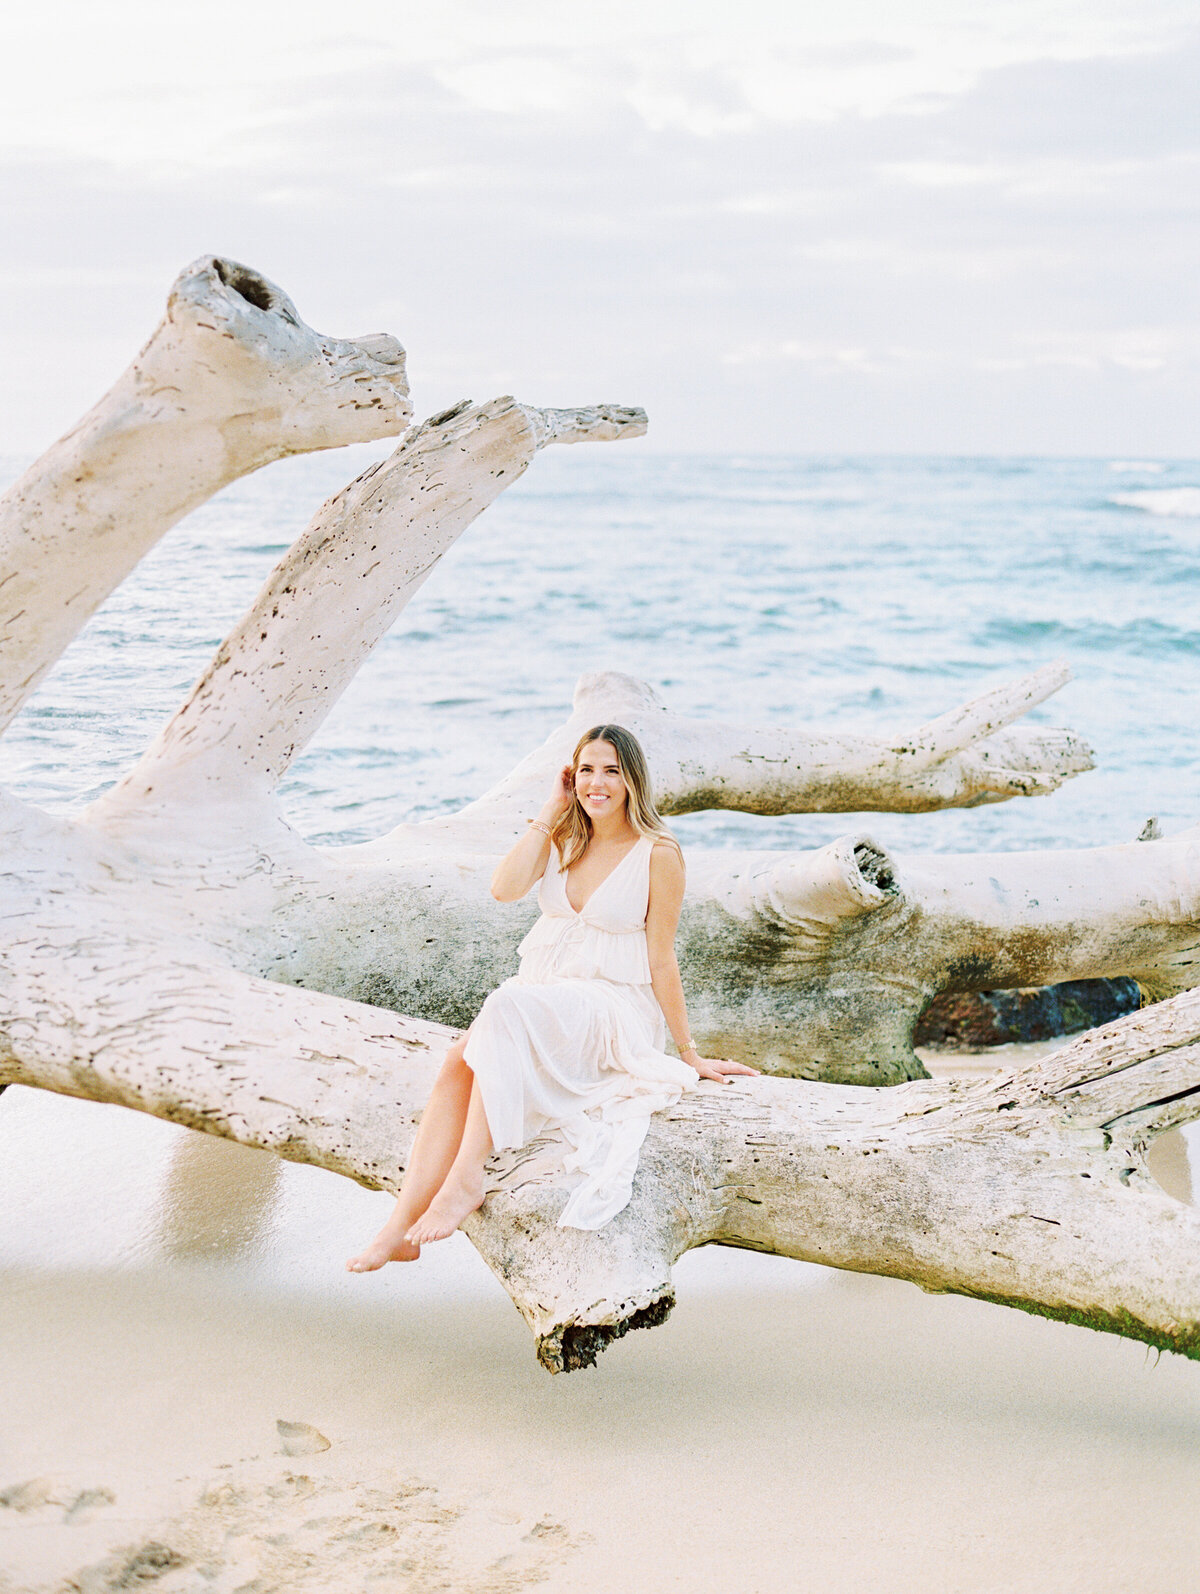 MackenzieMaternity | Hawaii Wedding & Lifestyle Photography | Ashley Goodwin Photography